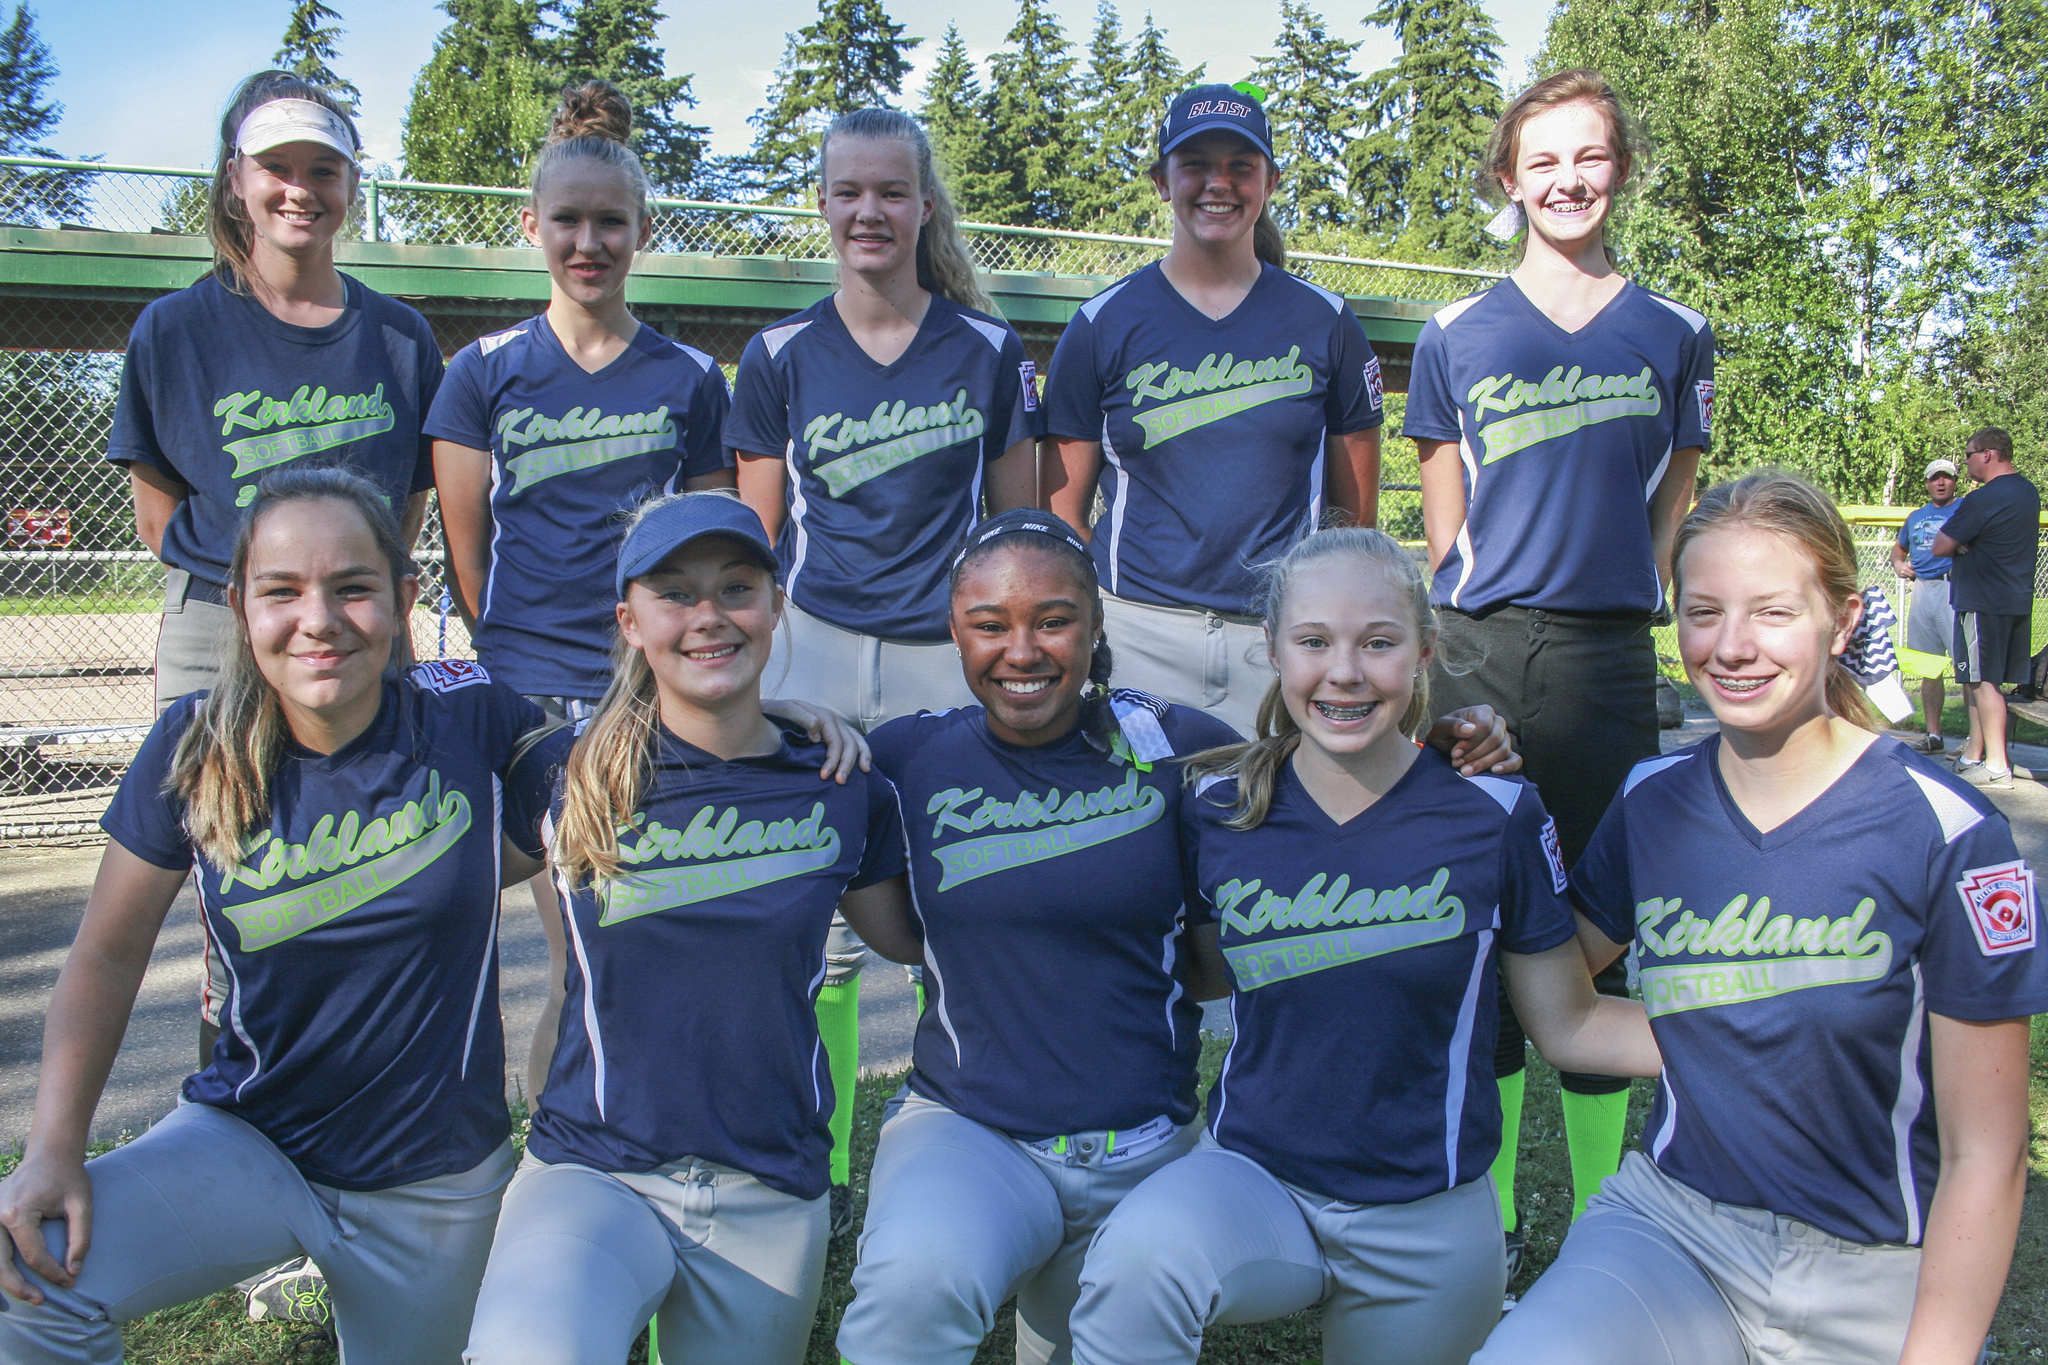 Meet the girls representing Kirkland in the Junior Softball World Series